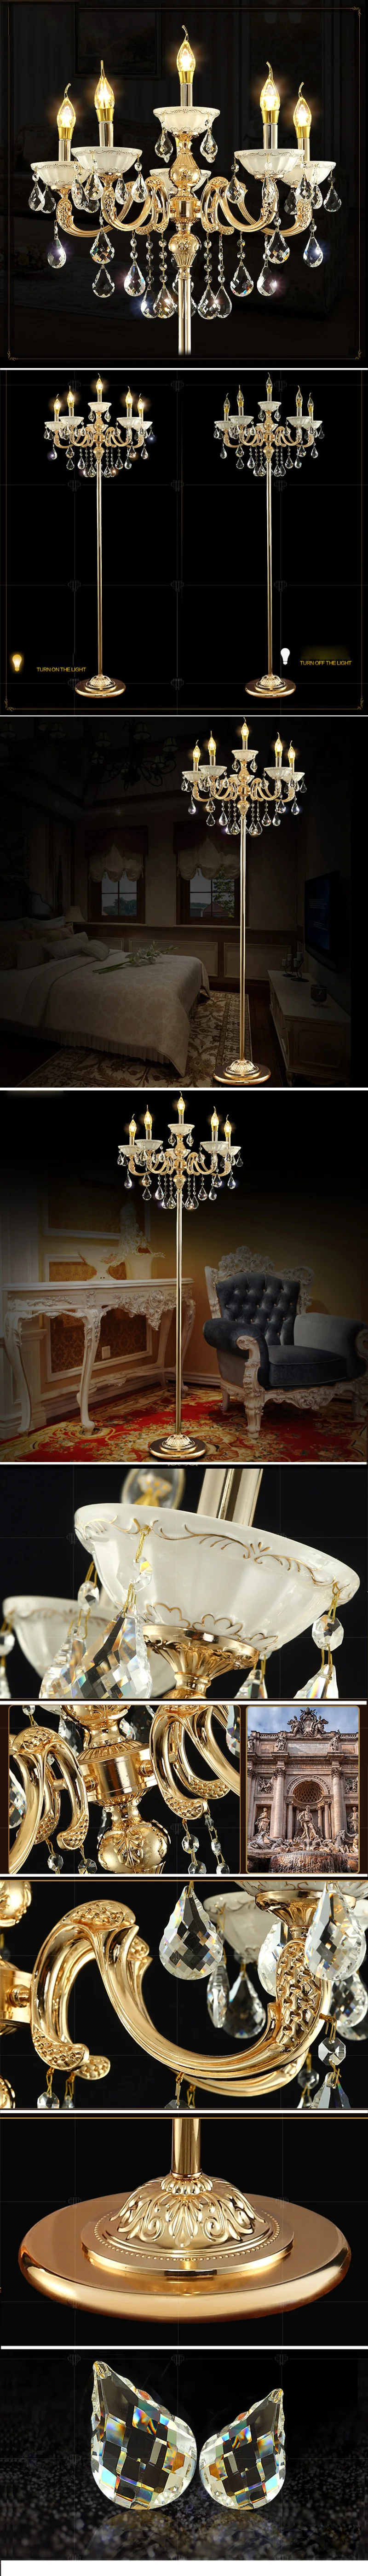 England popular furniture match modern home decor standing lamp  European contemporary black tripod floor lamp for hotel